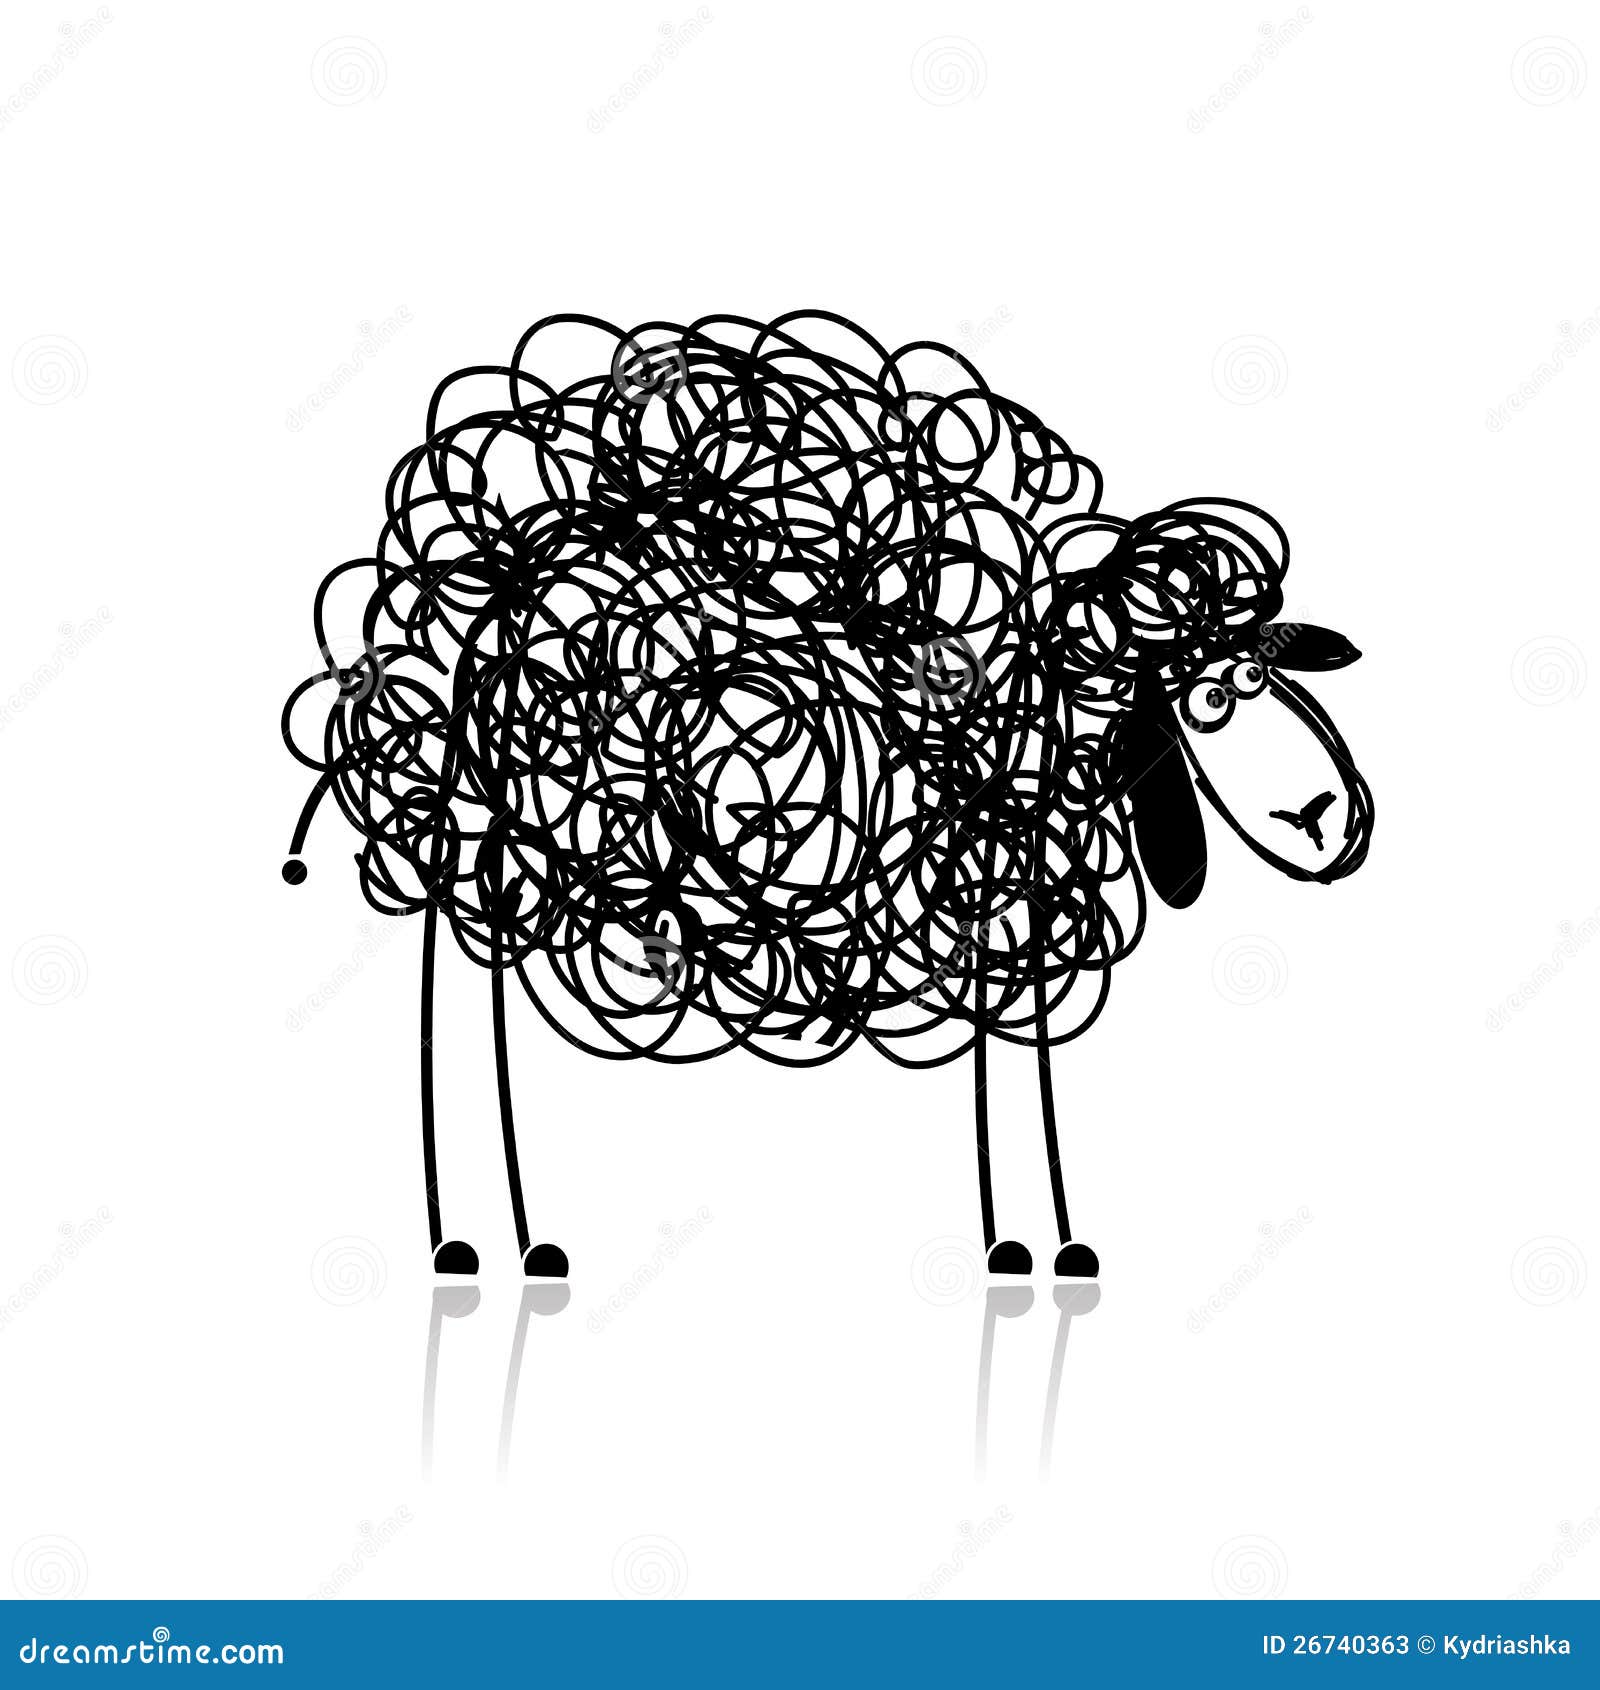 funny black sheep, sketch